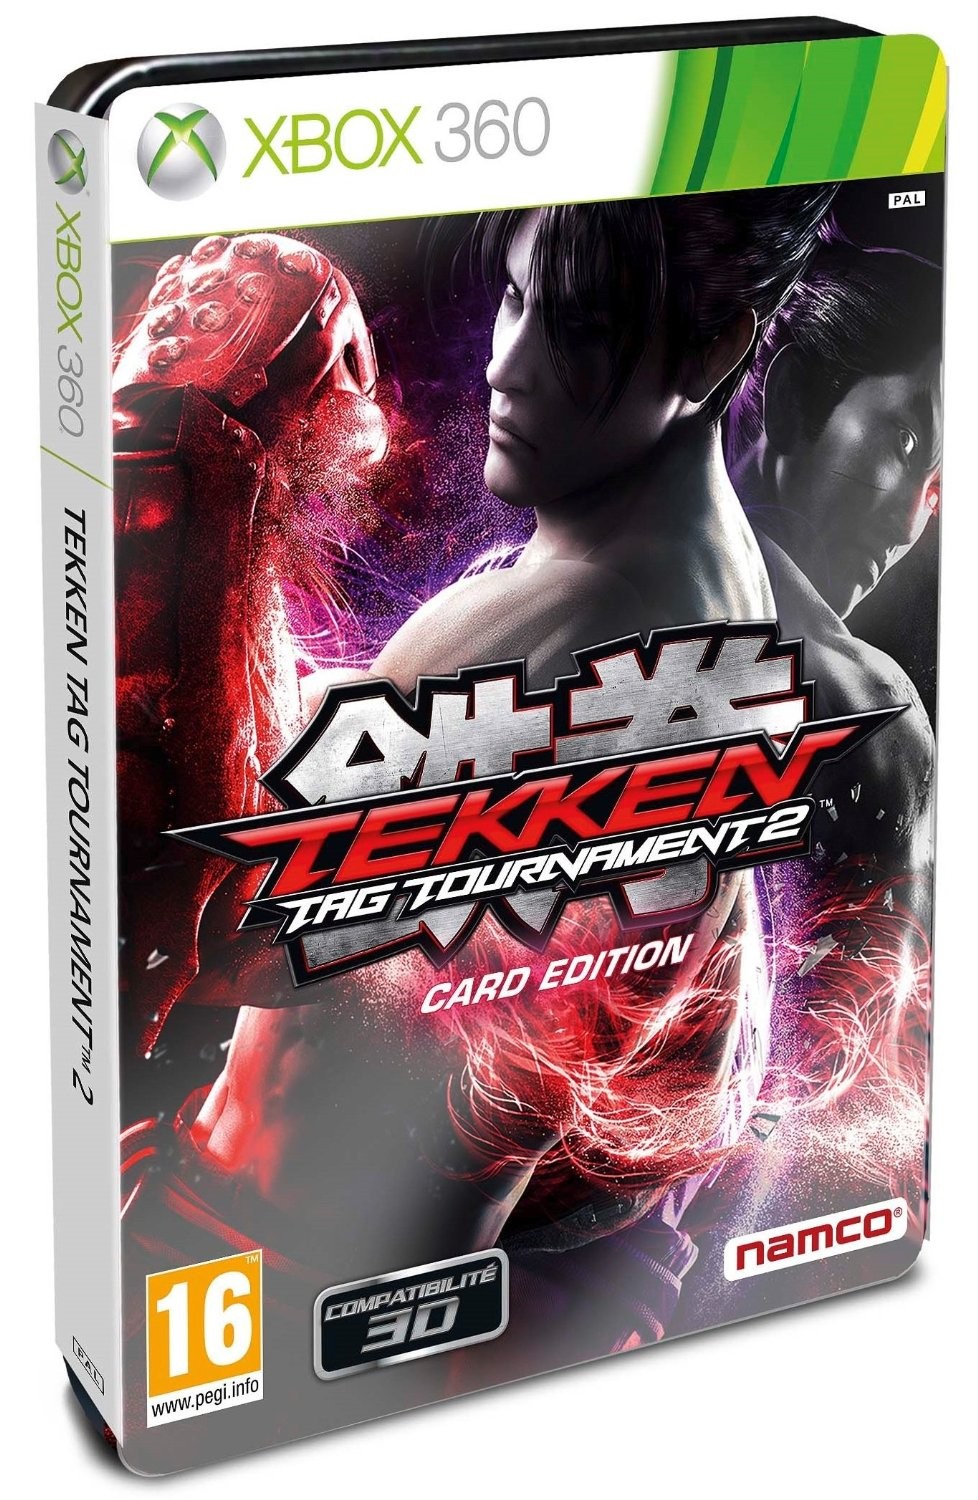 Tekken Tag Tournament 2 Card Edition